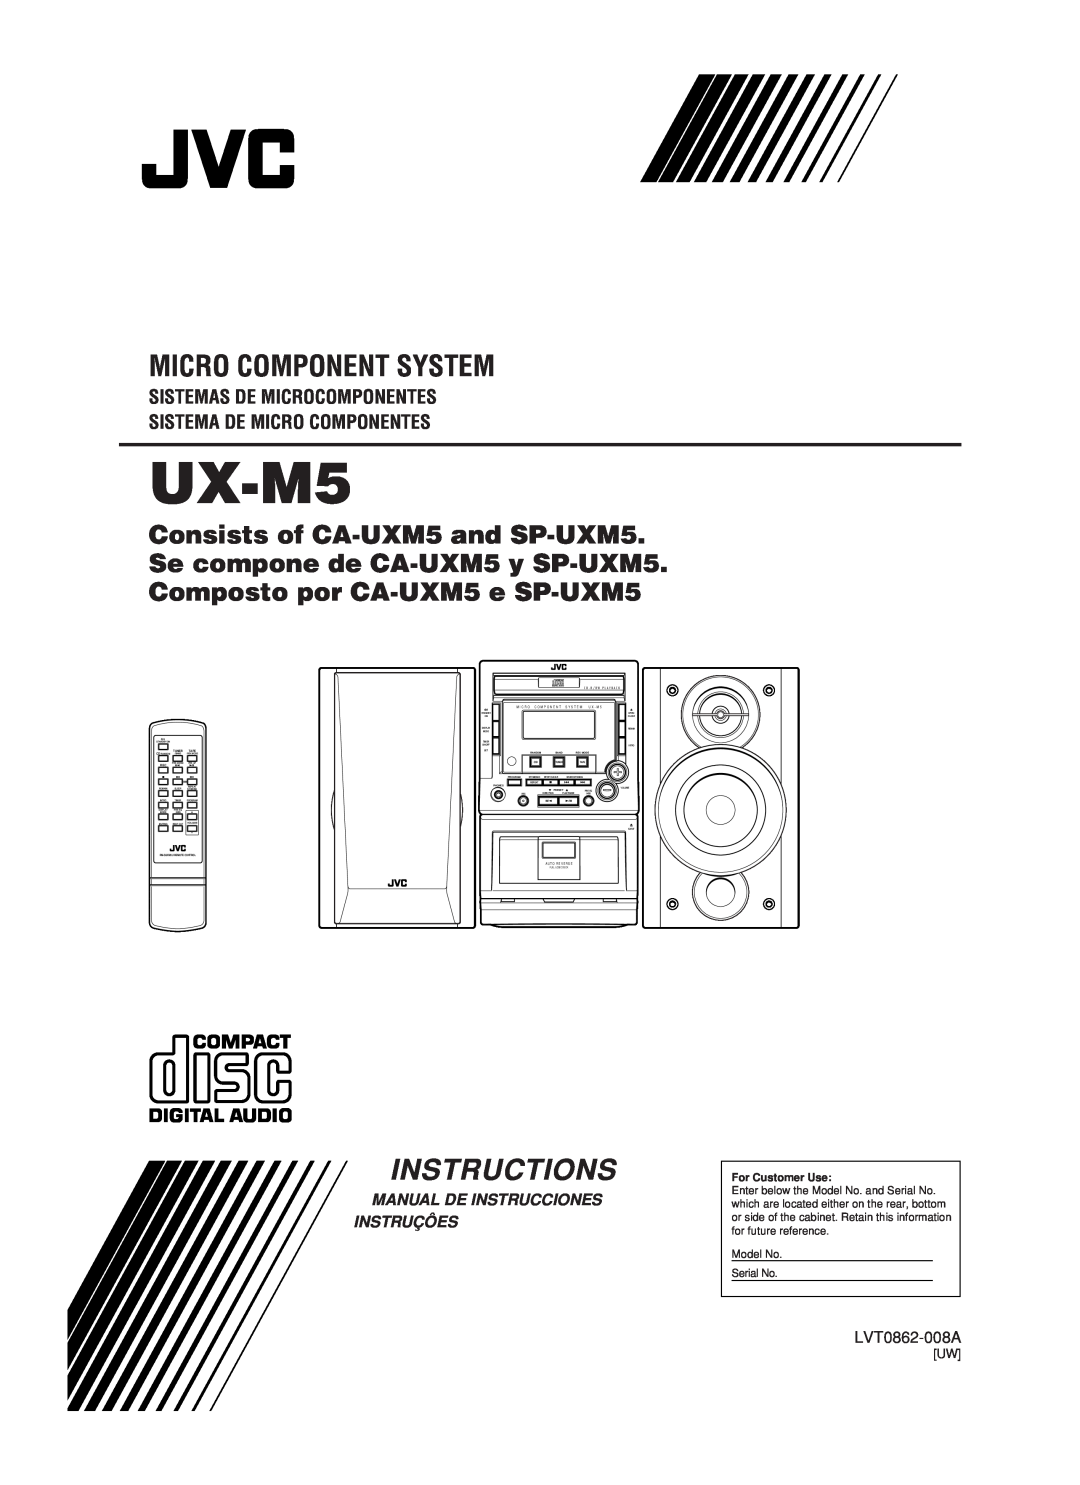 JVC UX-M5 manual Micro Component System, Instructions, Manual De Instrucciones Instruçôes, LVT0862-008A, For Customer Use 